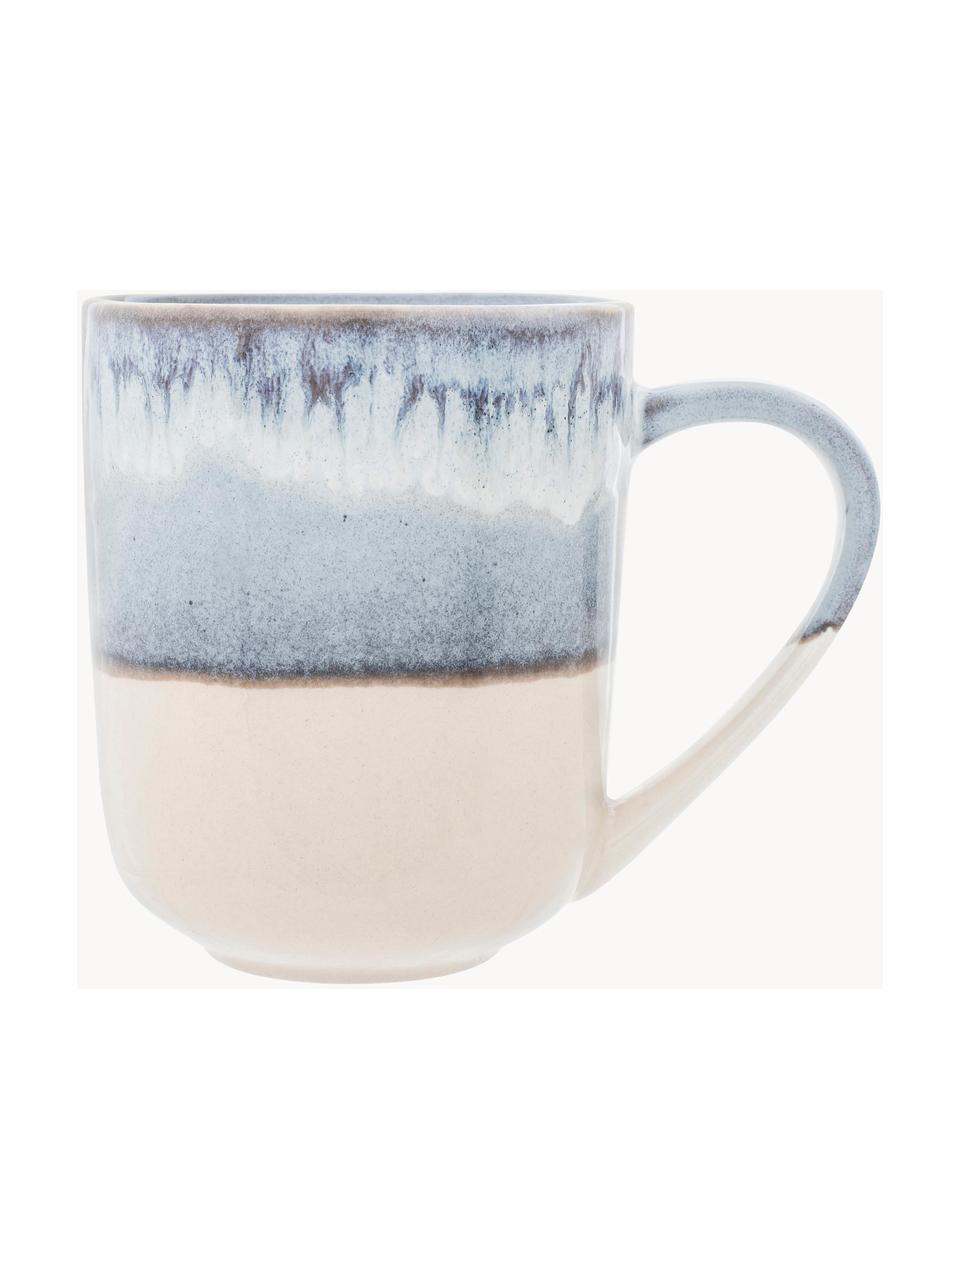 Tazza con gradiente Inspiration 2 pz, Ceramica, Tonalità blu, beige chiaro, Ø 9 x Alt. 11 cm, 400 ml